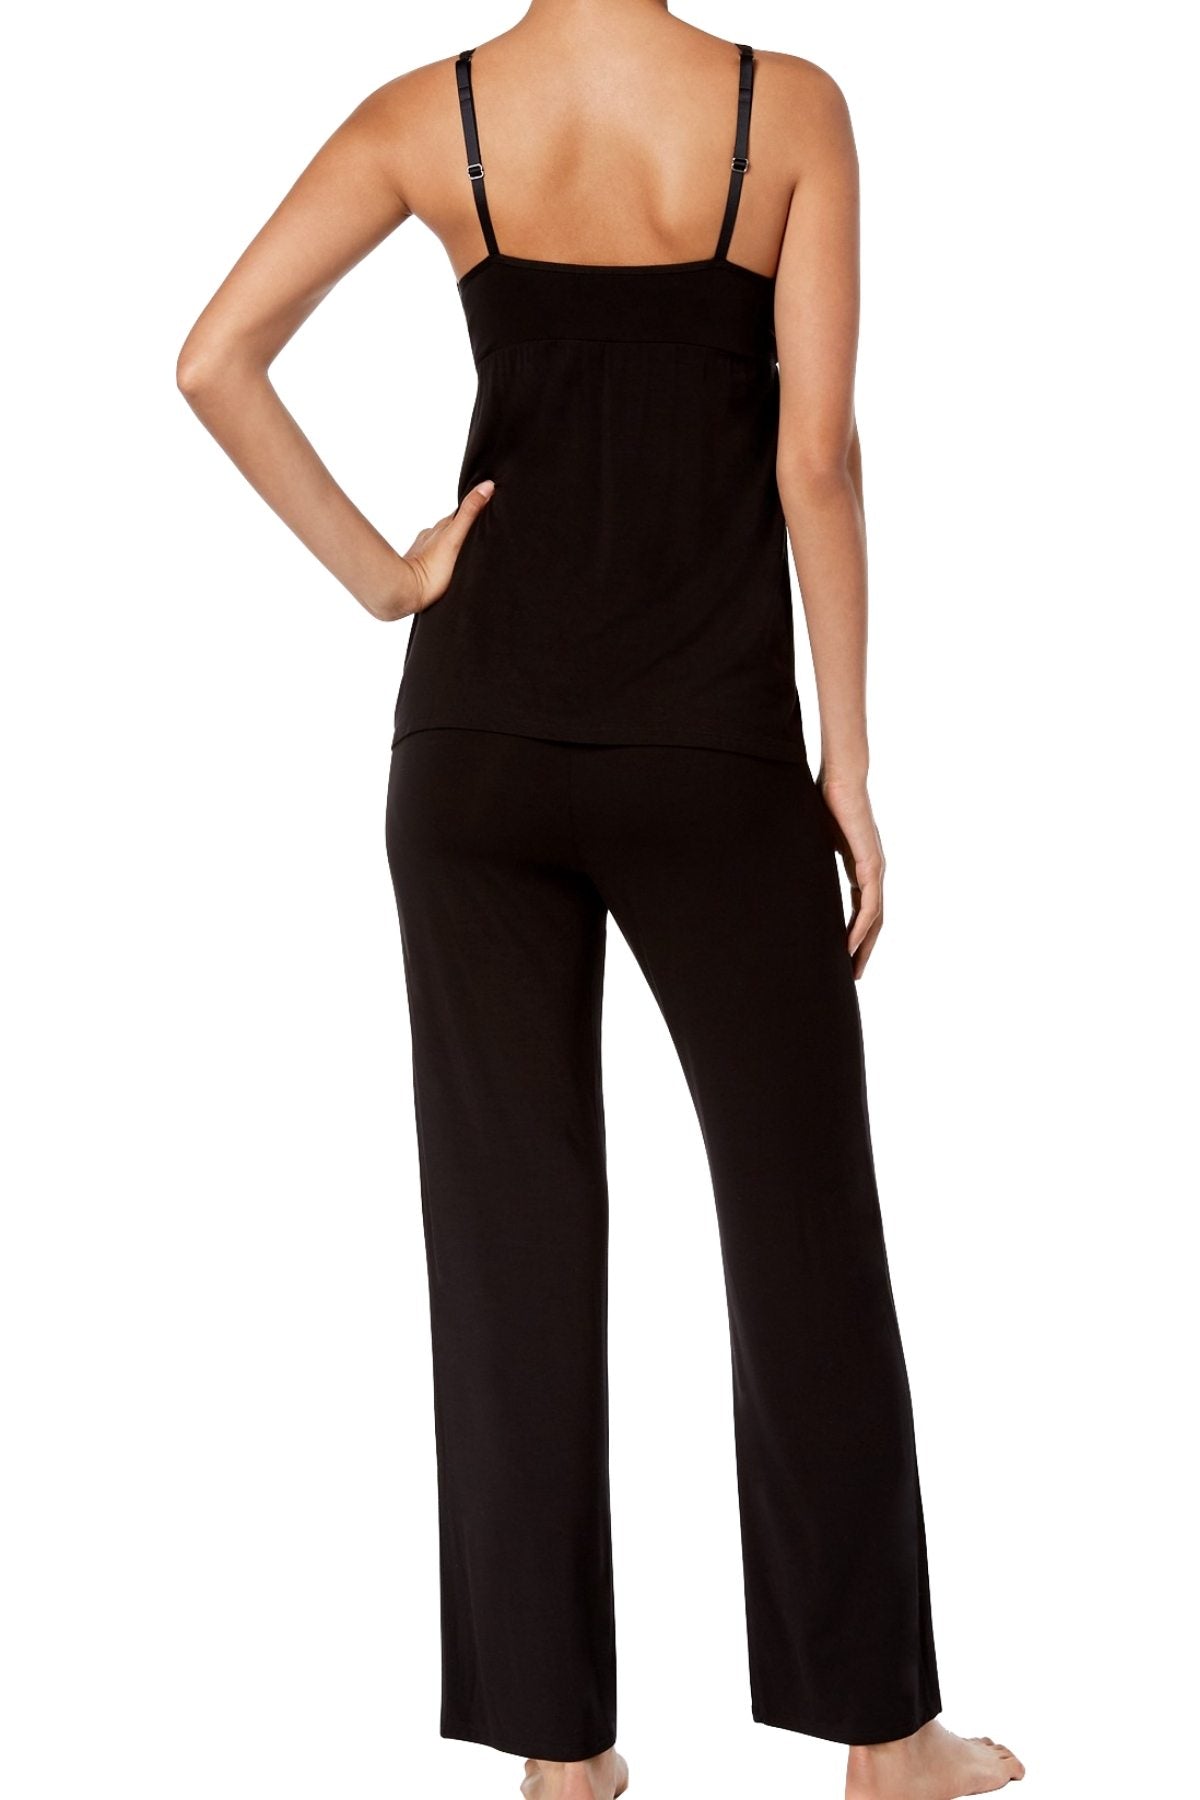 Thalia Sodi, Intimates & Sleepwear, Thalia Sodi Mid Thigh Shaping Shorts  Firm Control Size Xl Black